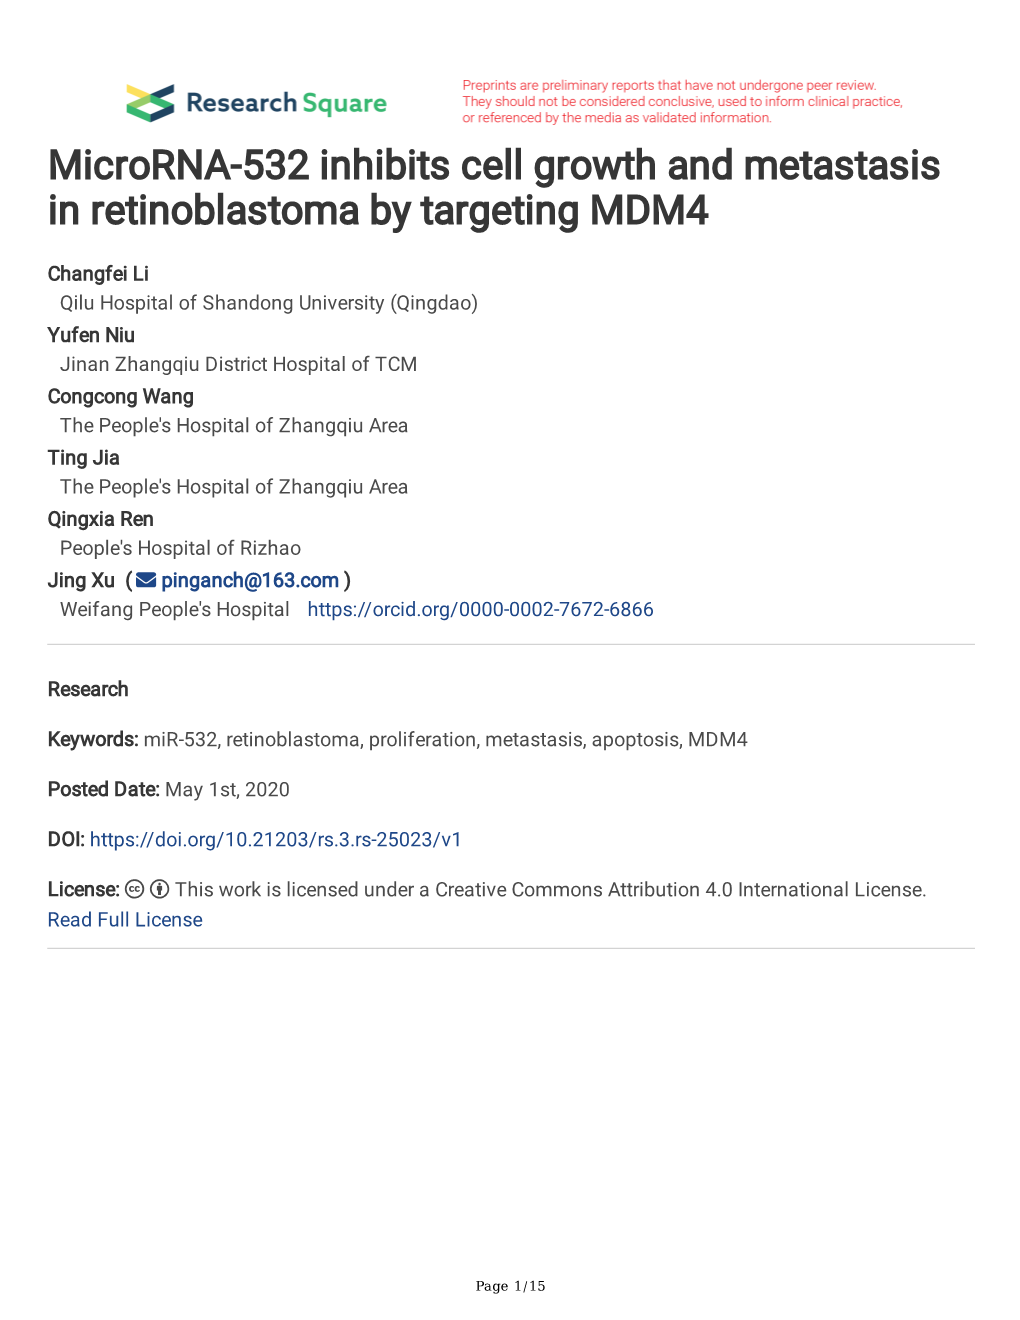 Microrna-532 Inhibits Cell Growth and Metastasis in Retinoblastoma by Targeting MDM4